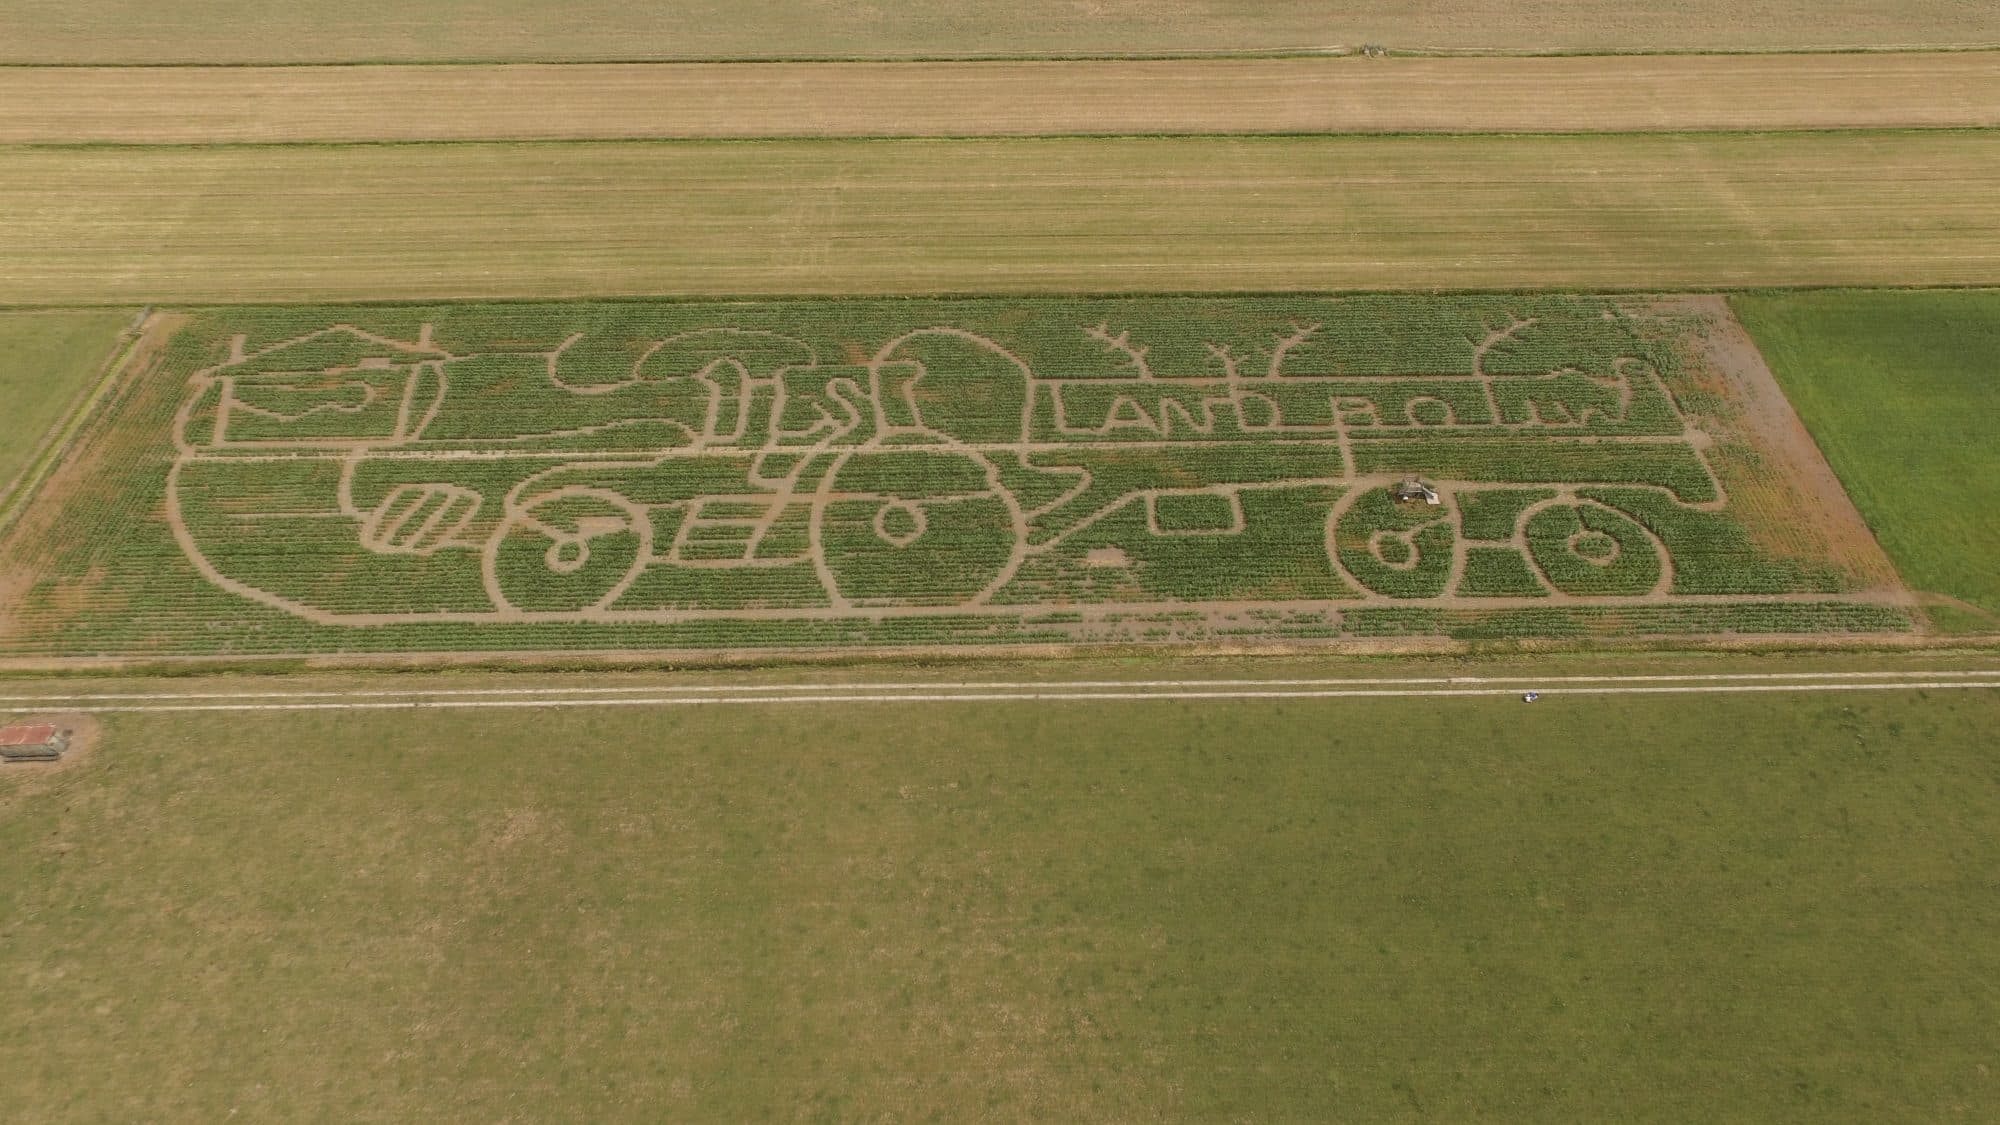 Doolhof Nederland; van grootste maisdoolhof tot labyrinth - Reisliefde